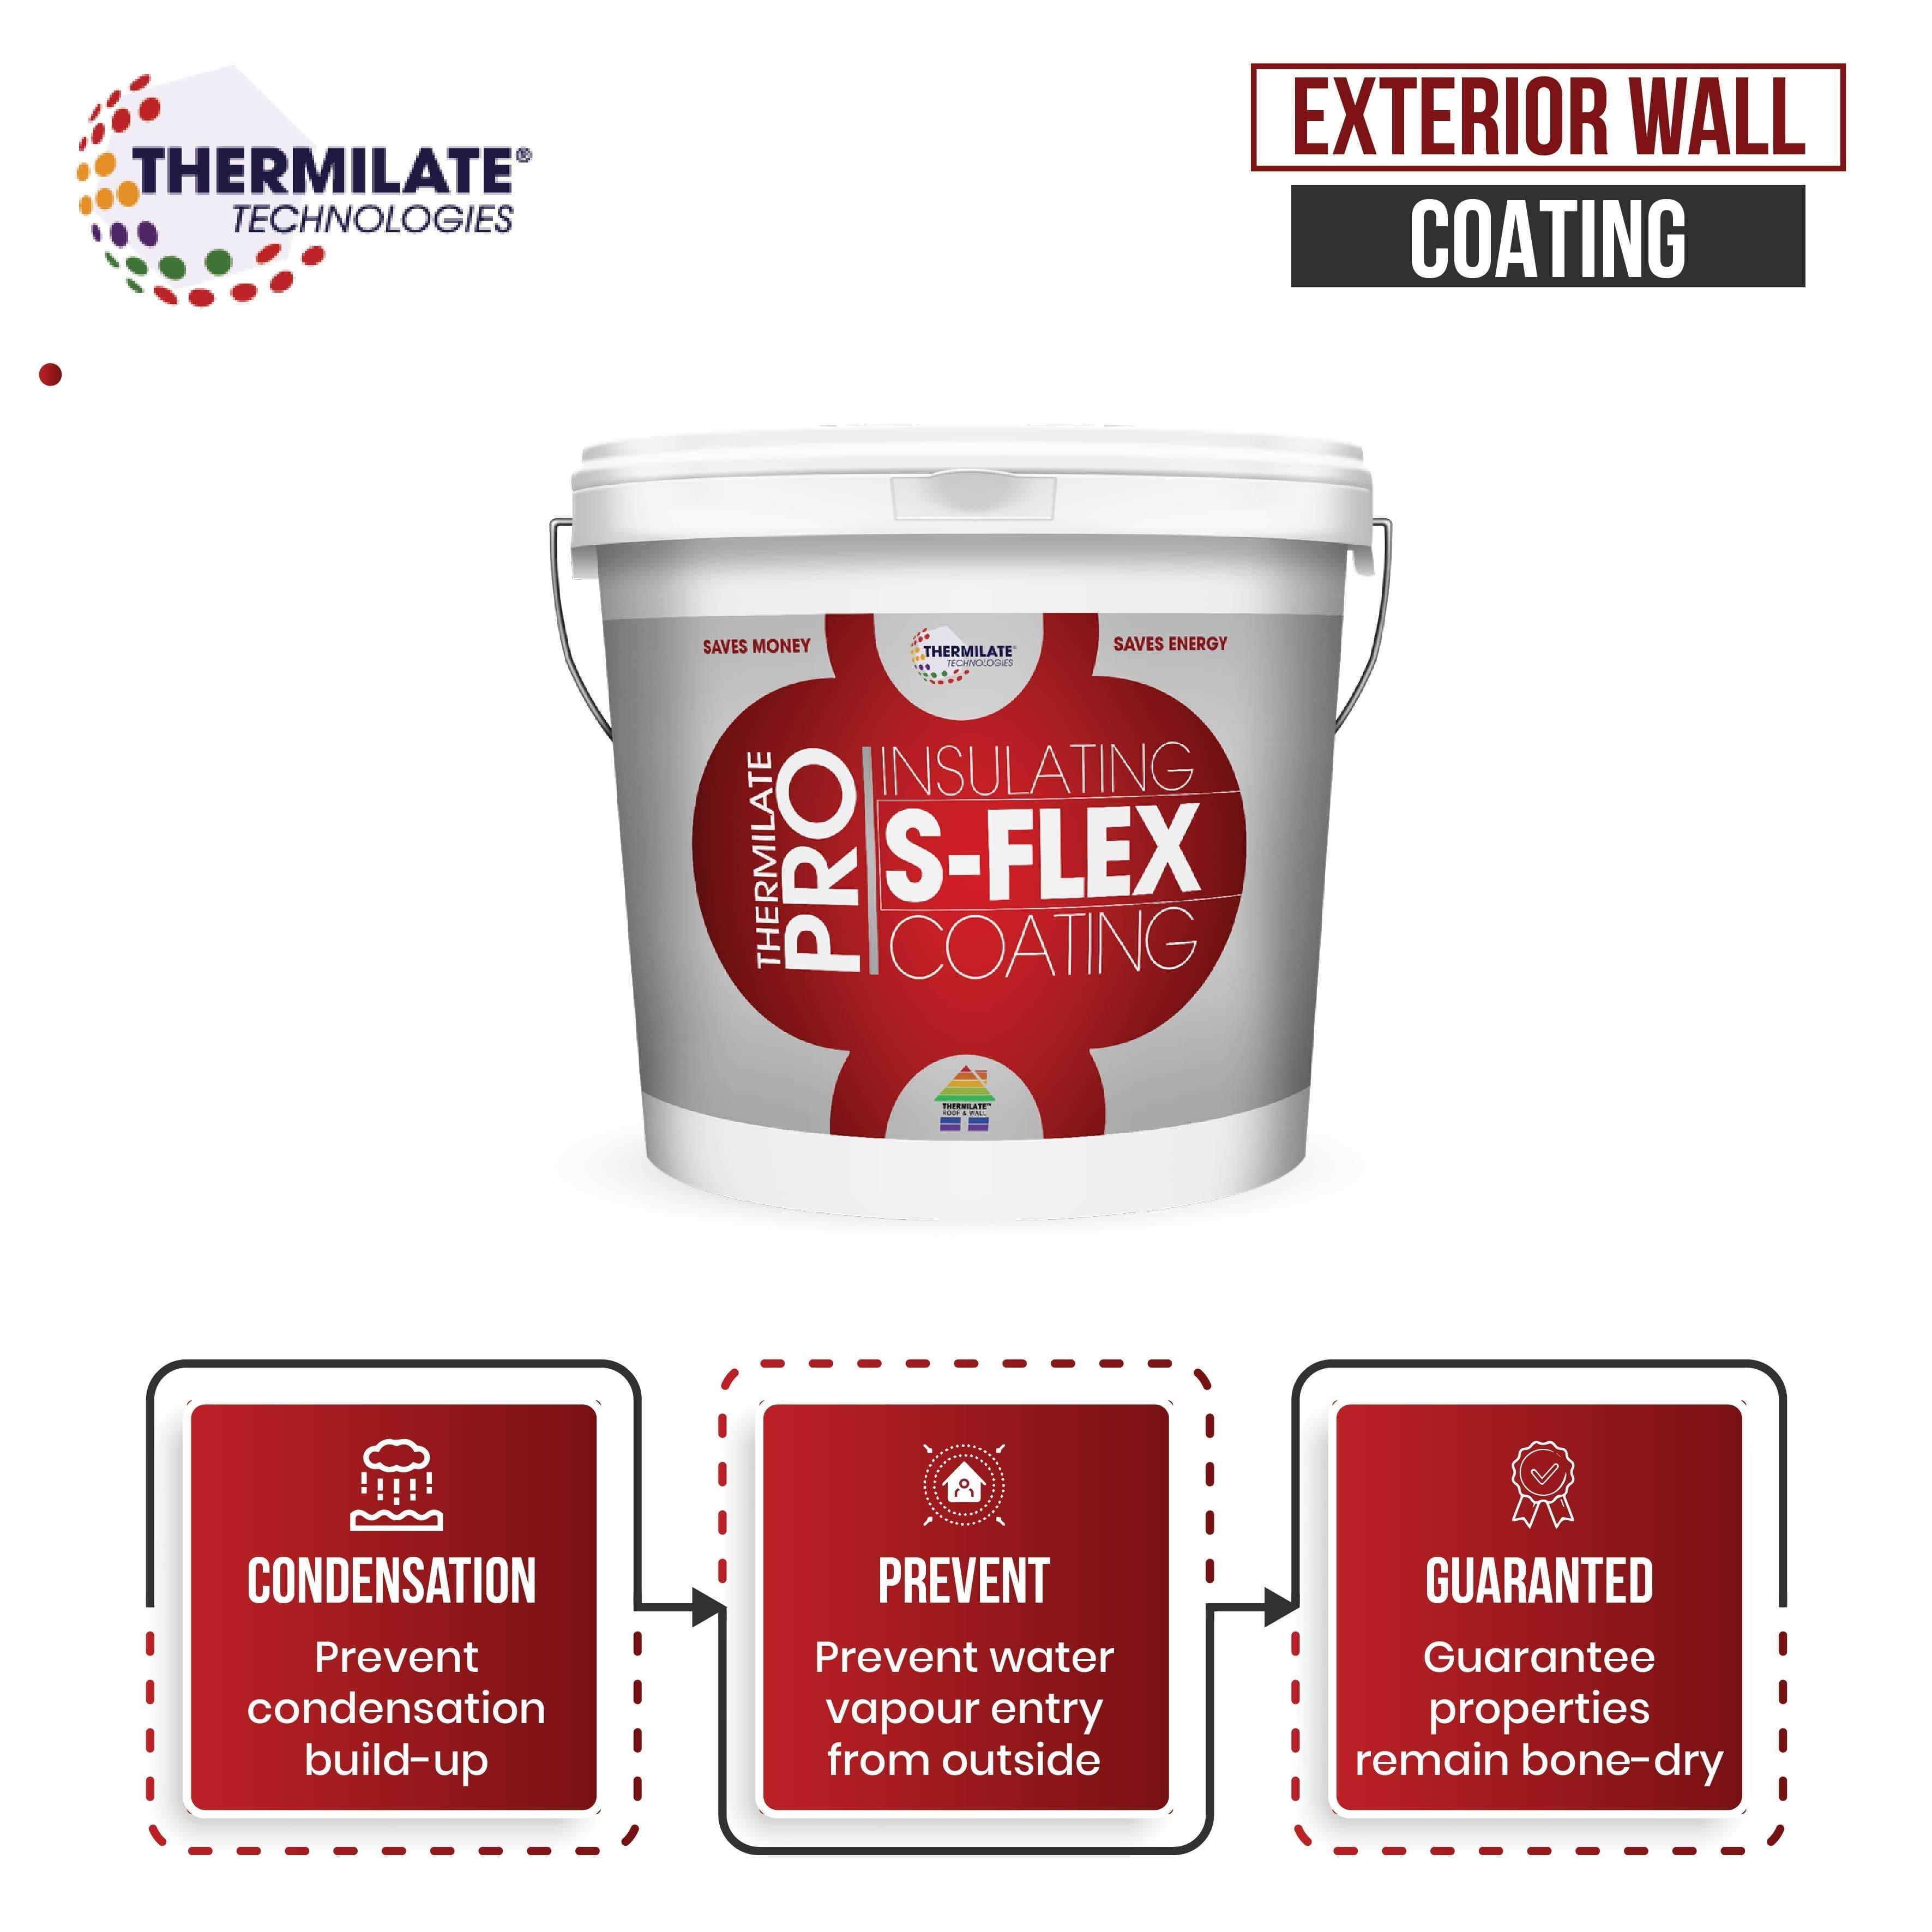 PRO Interior / Exterior Wall Coating (S-Flex) - PaintOutlet.co.uk